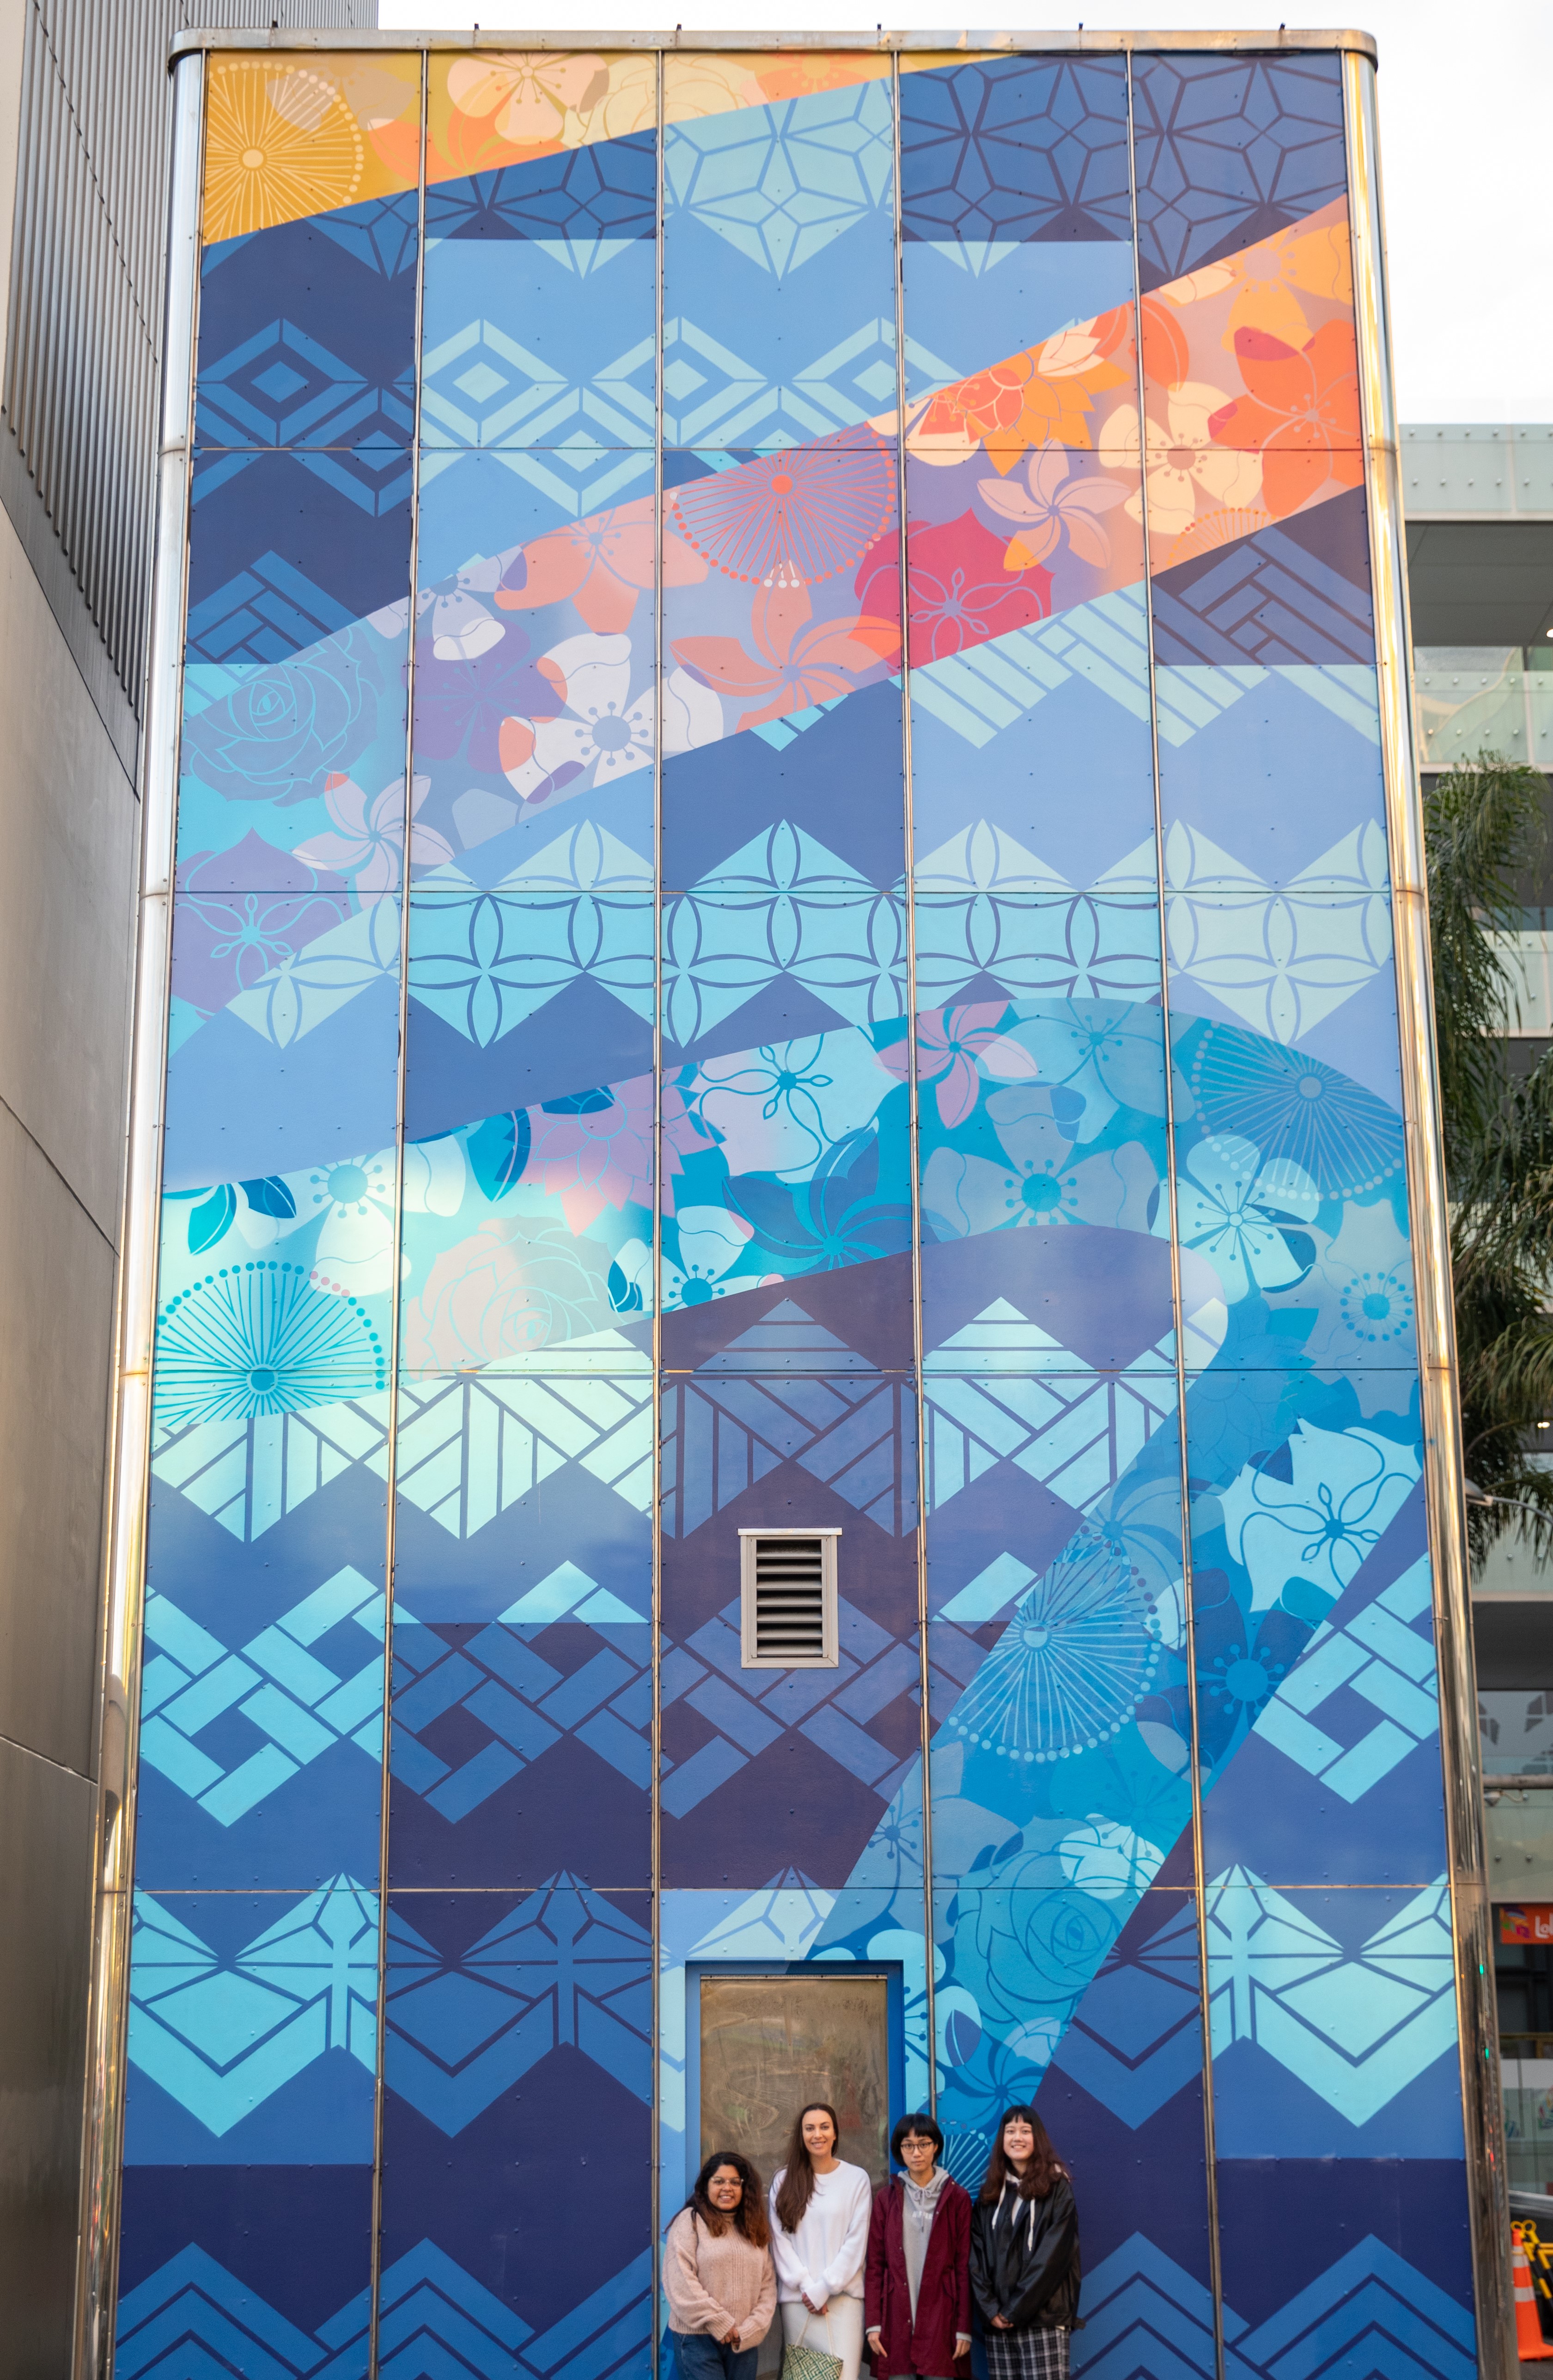 Mural celebrating culture and diversity adds colour to Tāmaki Makaurau street